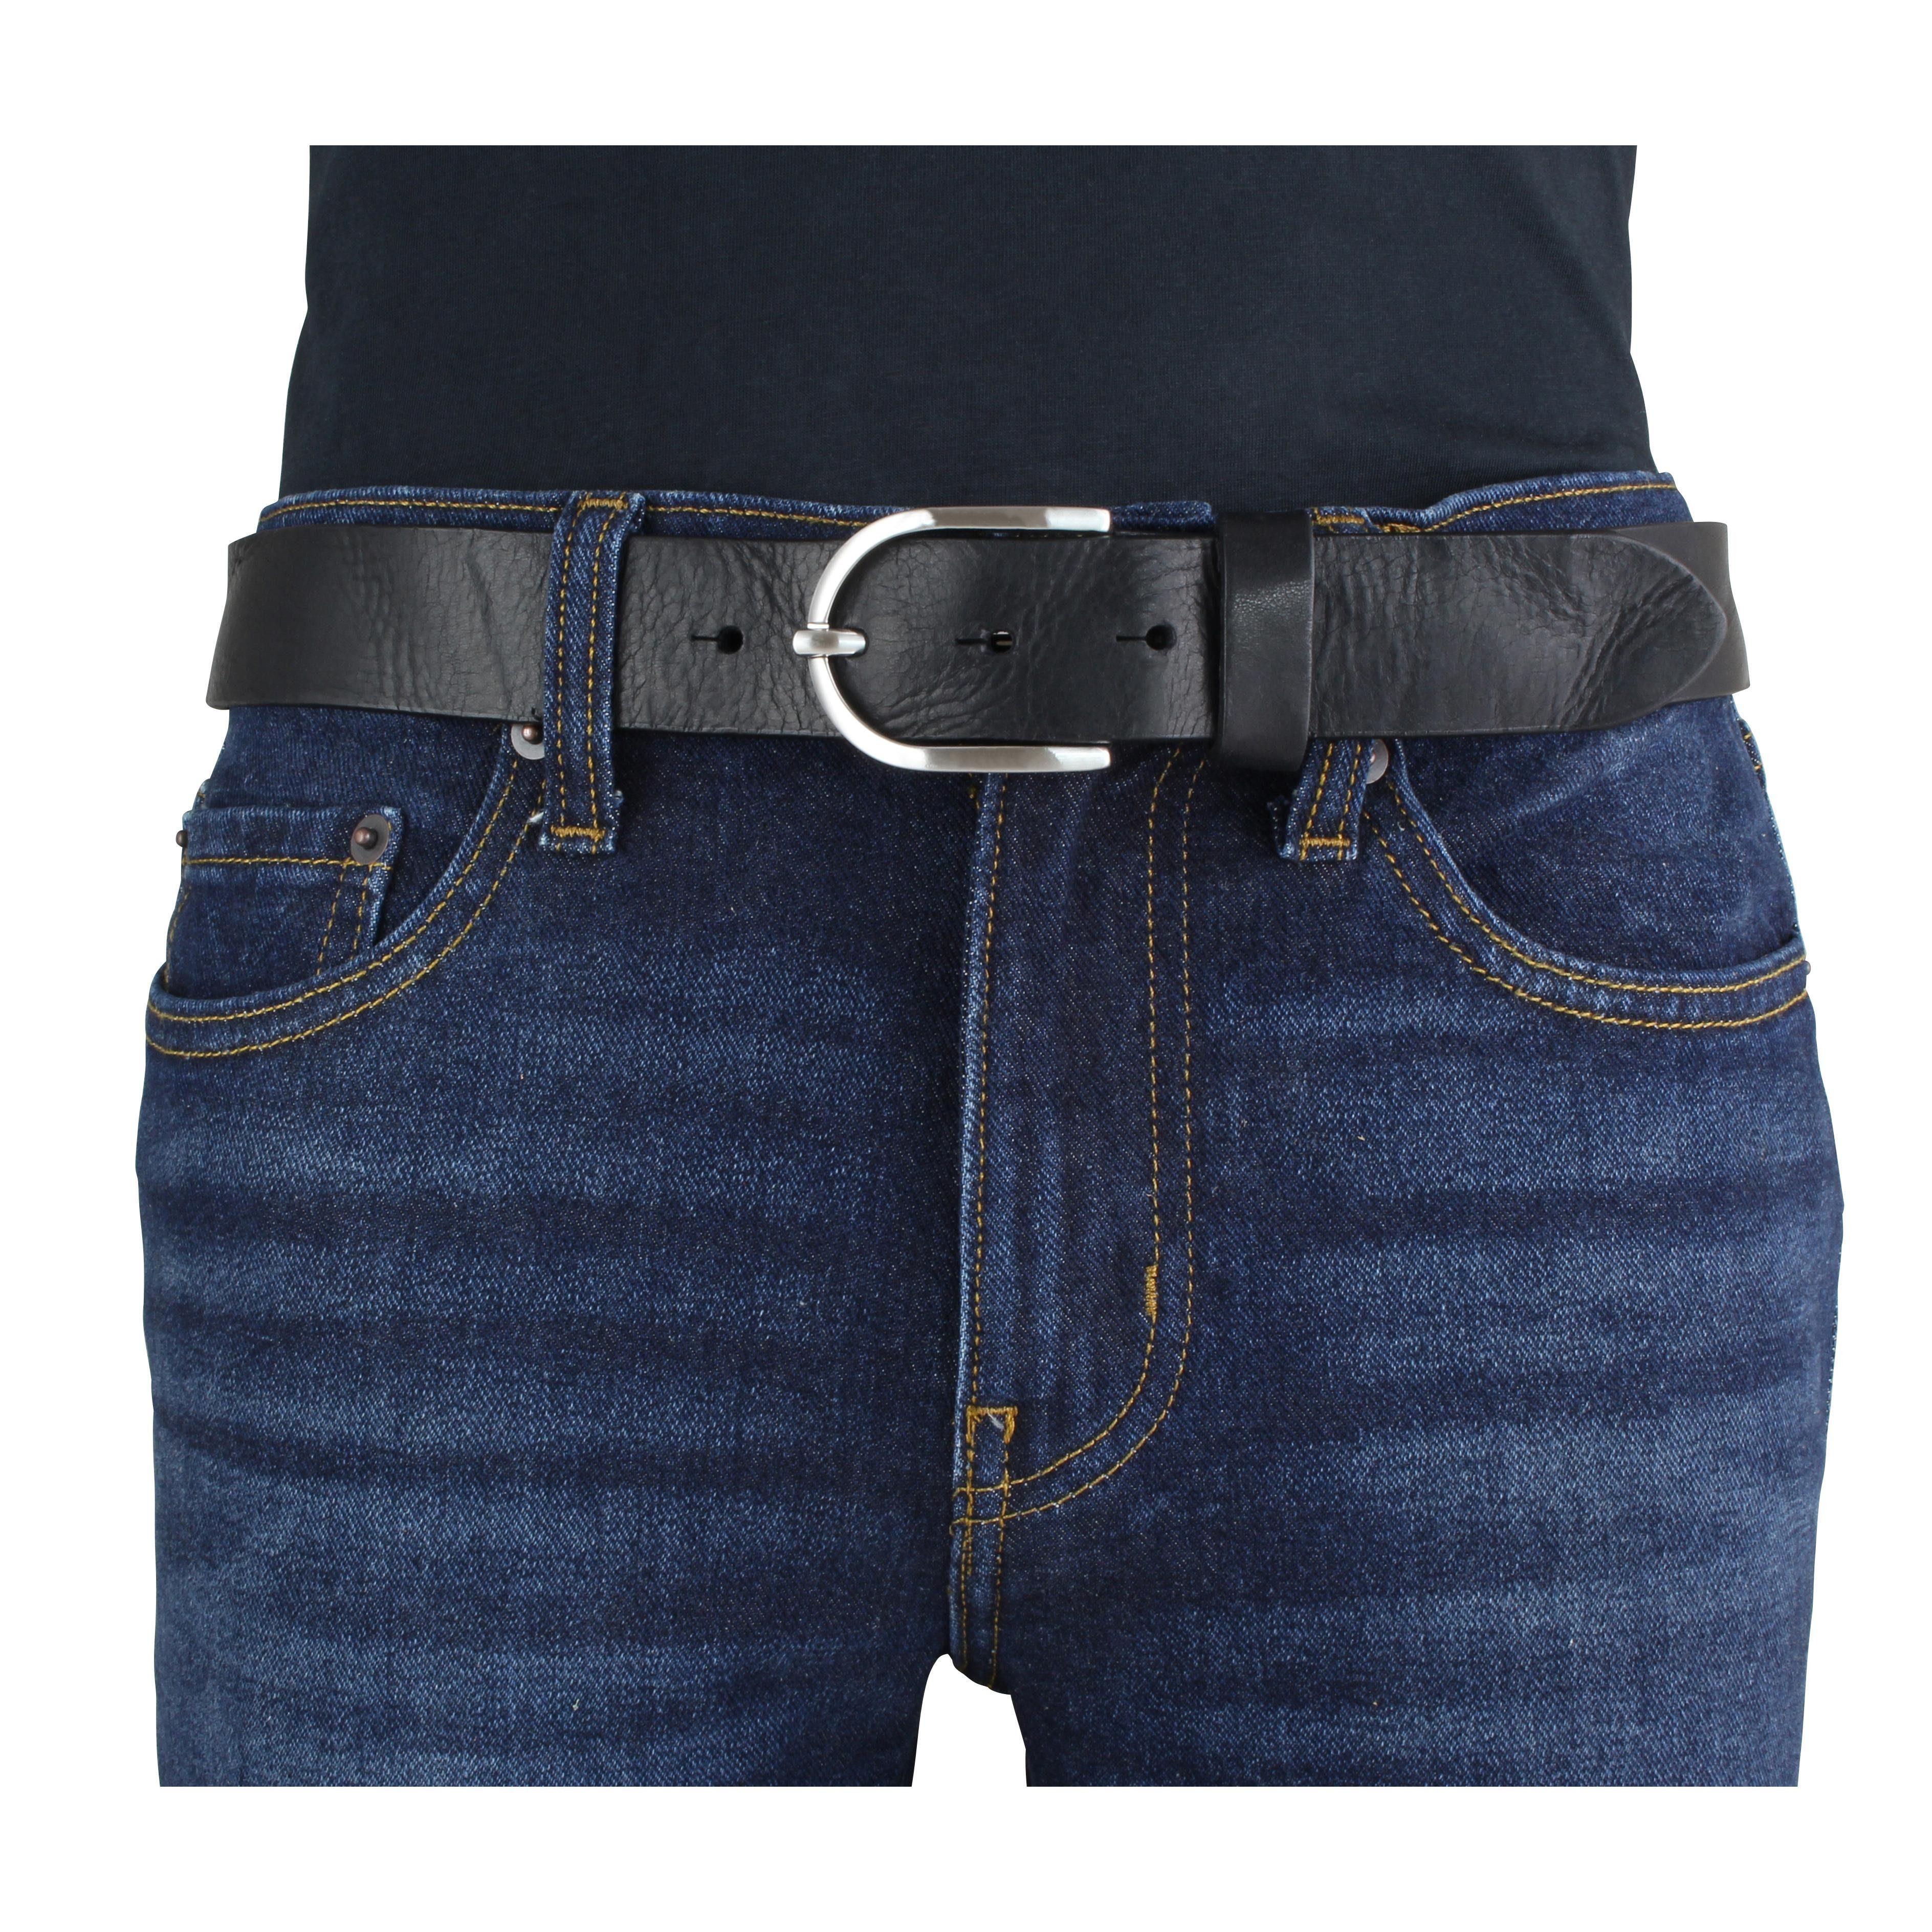 Schwarz, aus Used-Look Vollrindleder Damen-Gürtel für cm Silber BELTINGER Dam Jeans-Gürtel 3,5 Ledergürtel -